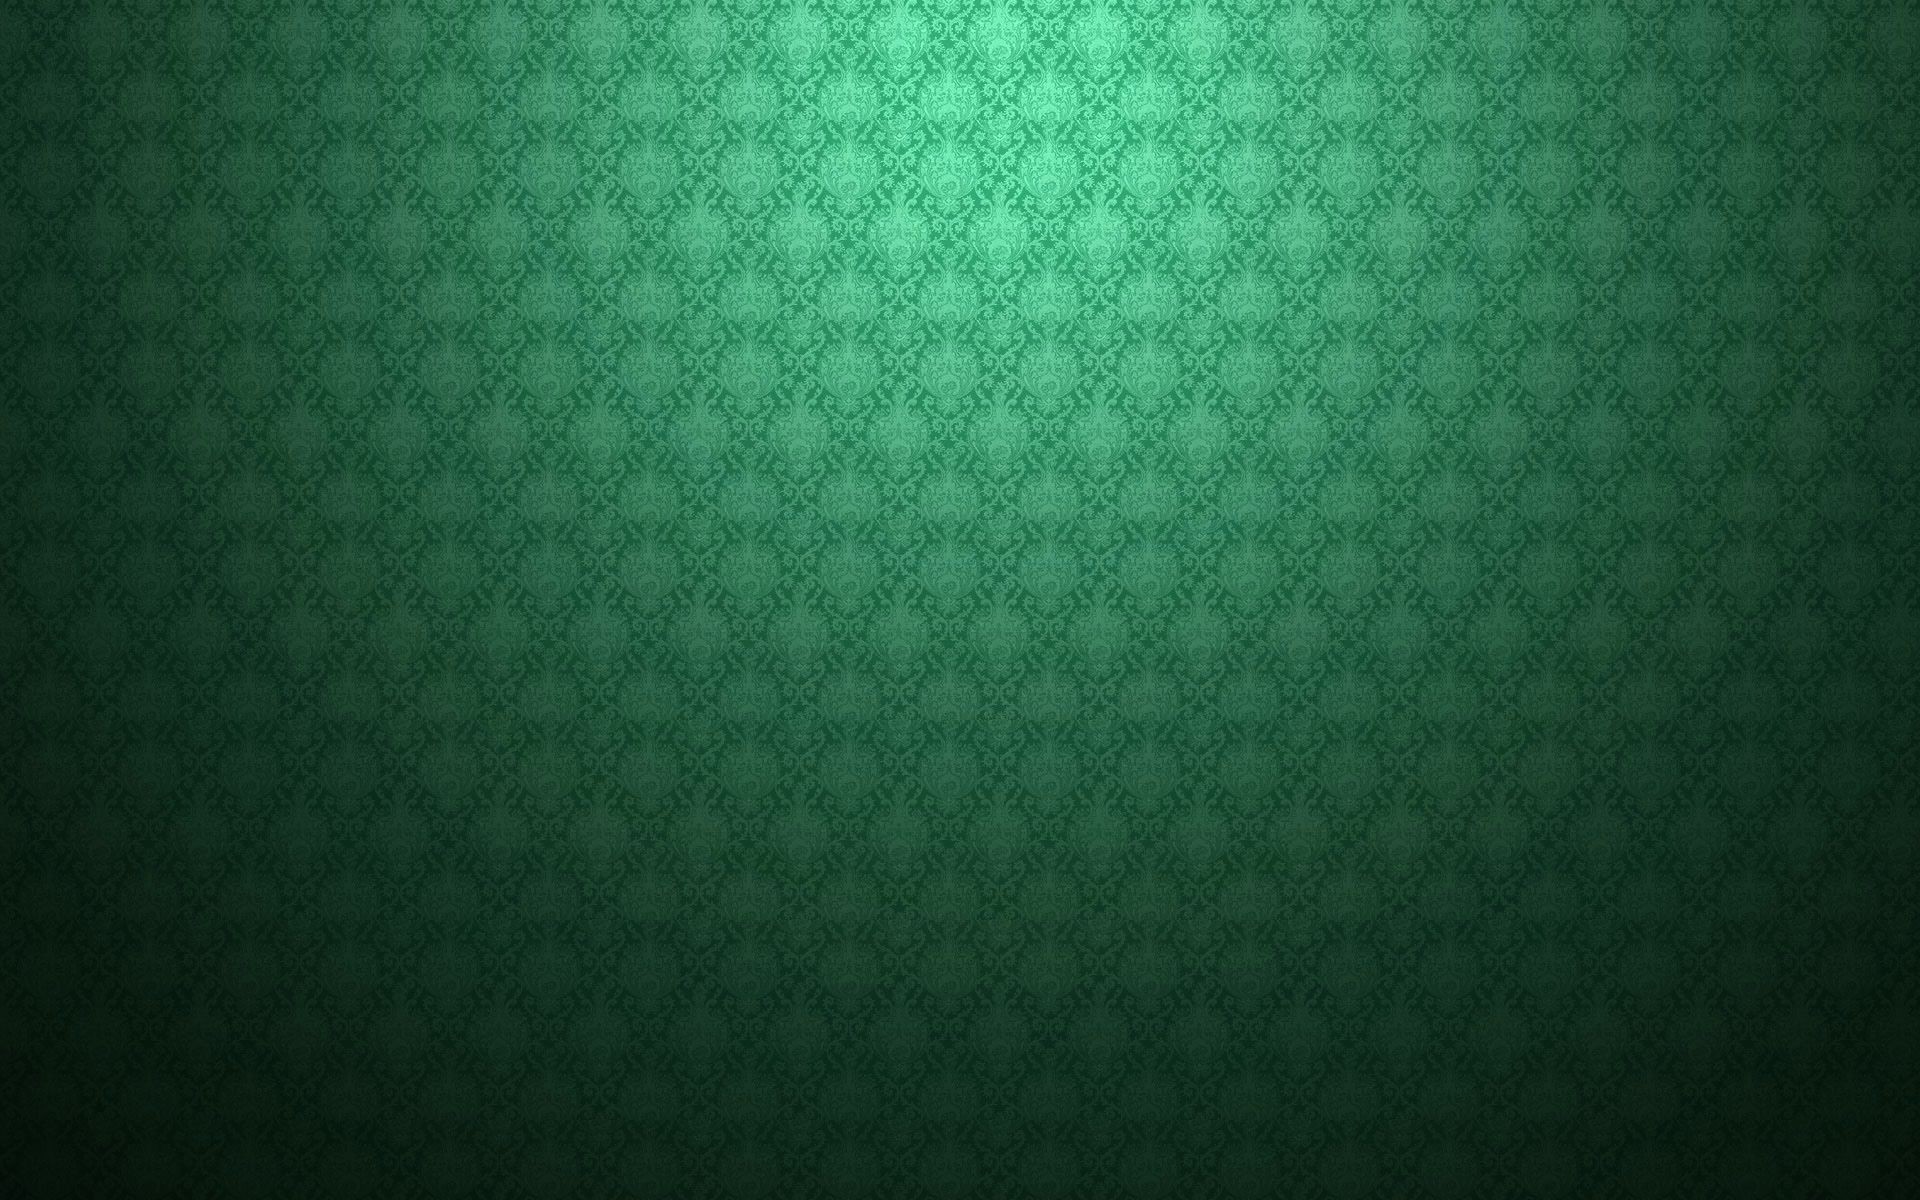 1920x1200 Best 25 Backgrounds ideas on Pinterest Wallpapers Â· mint green ...